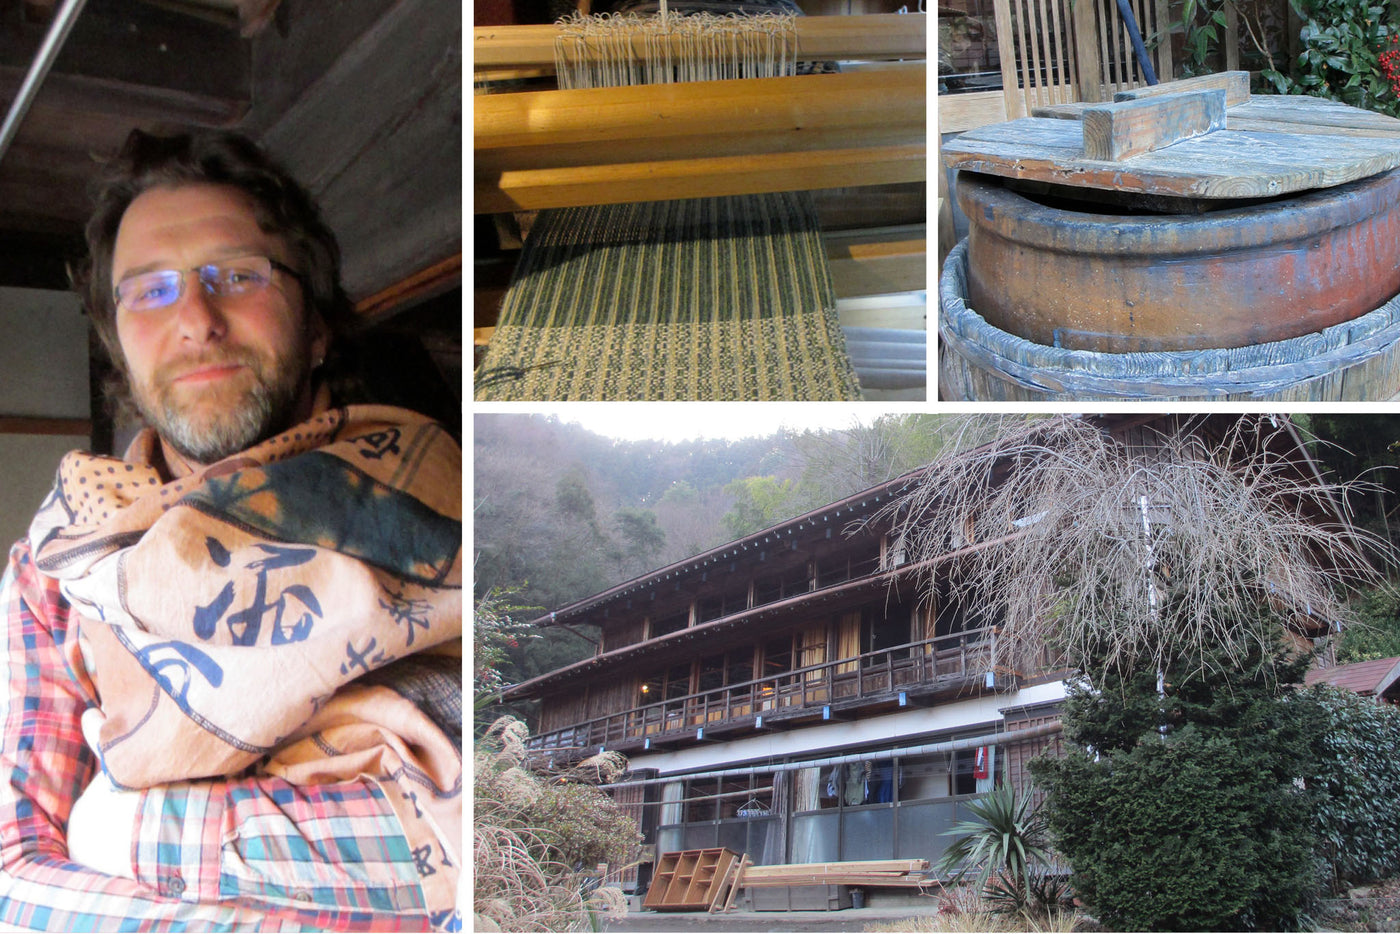 Bryan Whitehead of Fujino, Japan—indigo grower, dyer, weaver, silk farmer